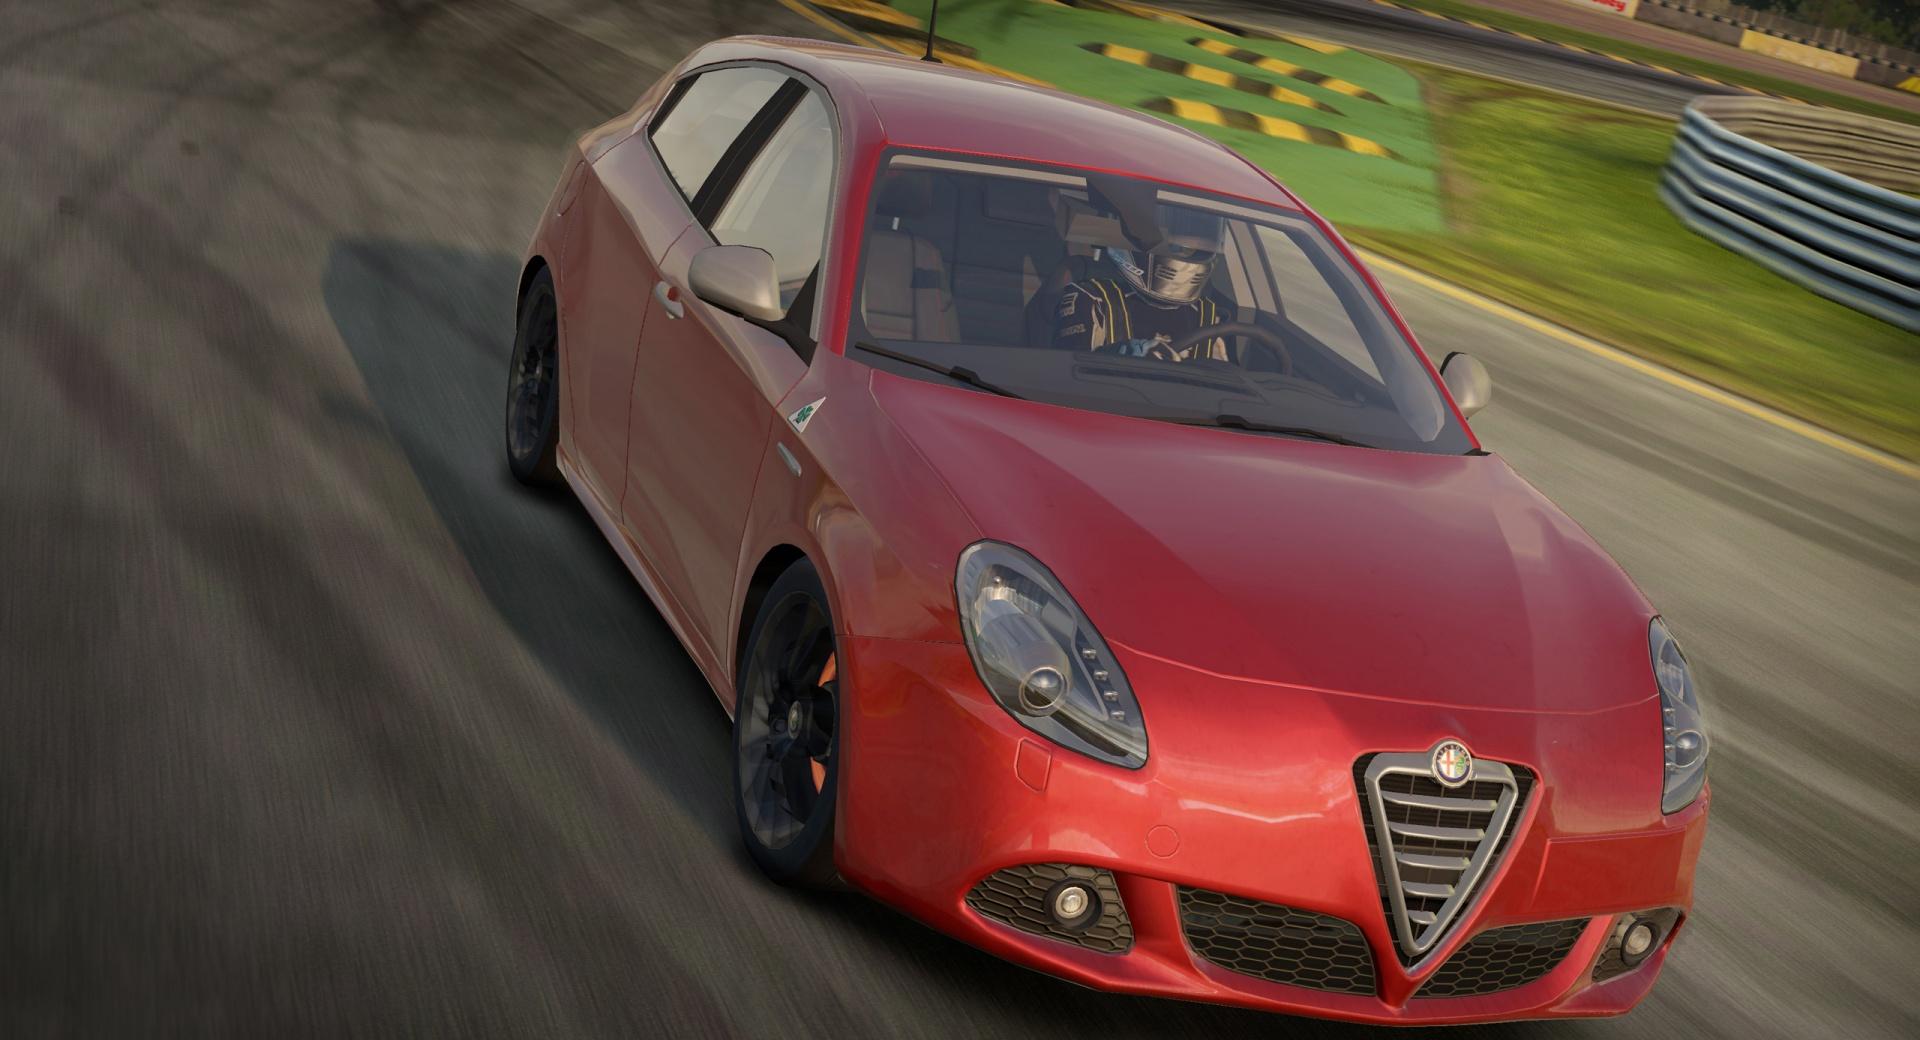 Need For Speed Shift 2, Alfa Romeo Giulietta Qv wallpapers HD quality